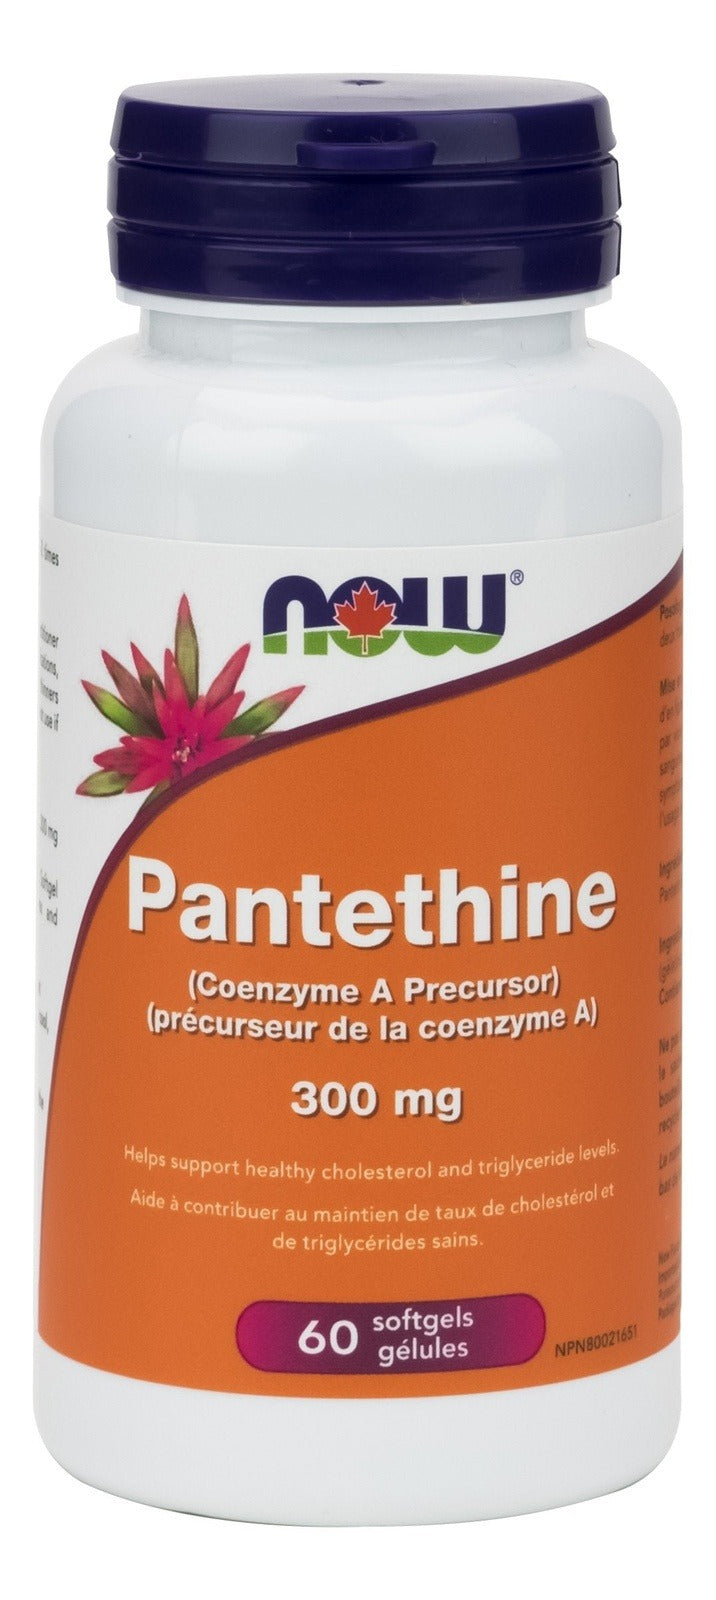 NOW Pantethine Coenzyme A Precursor 300 mg 60 Softgels Image 1